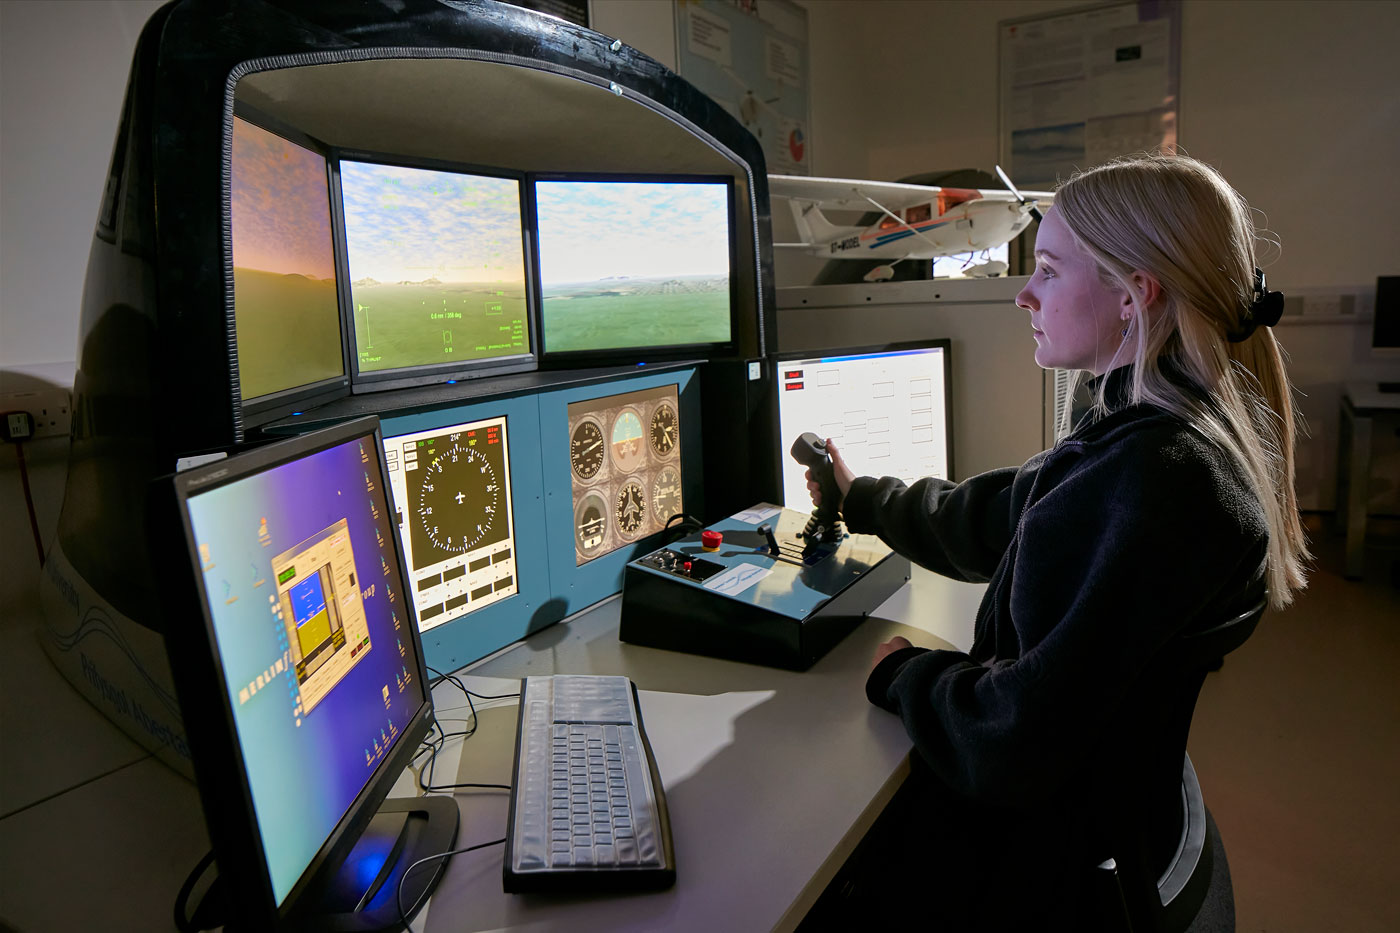 Female student in front of flight simulator